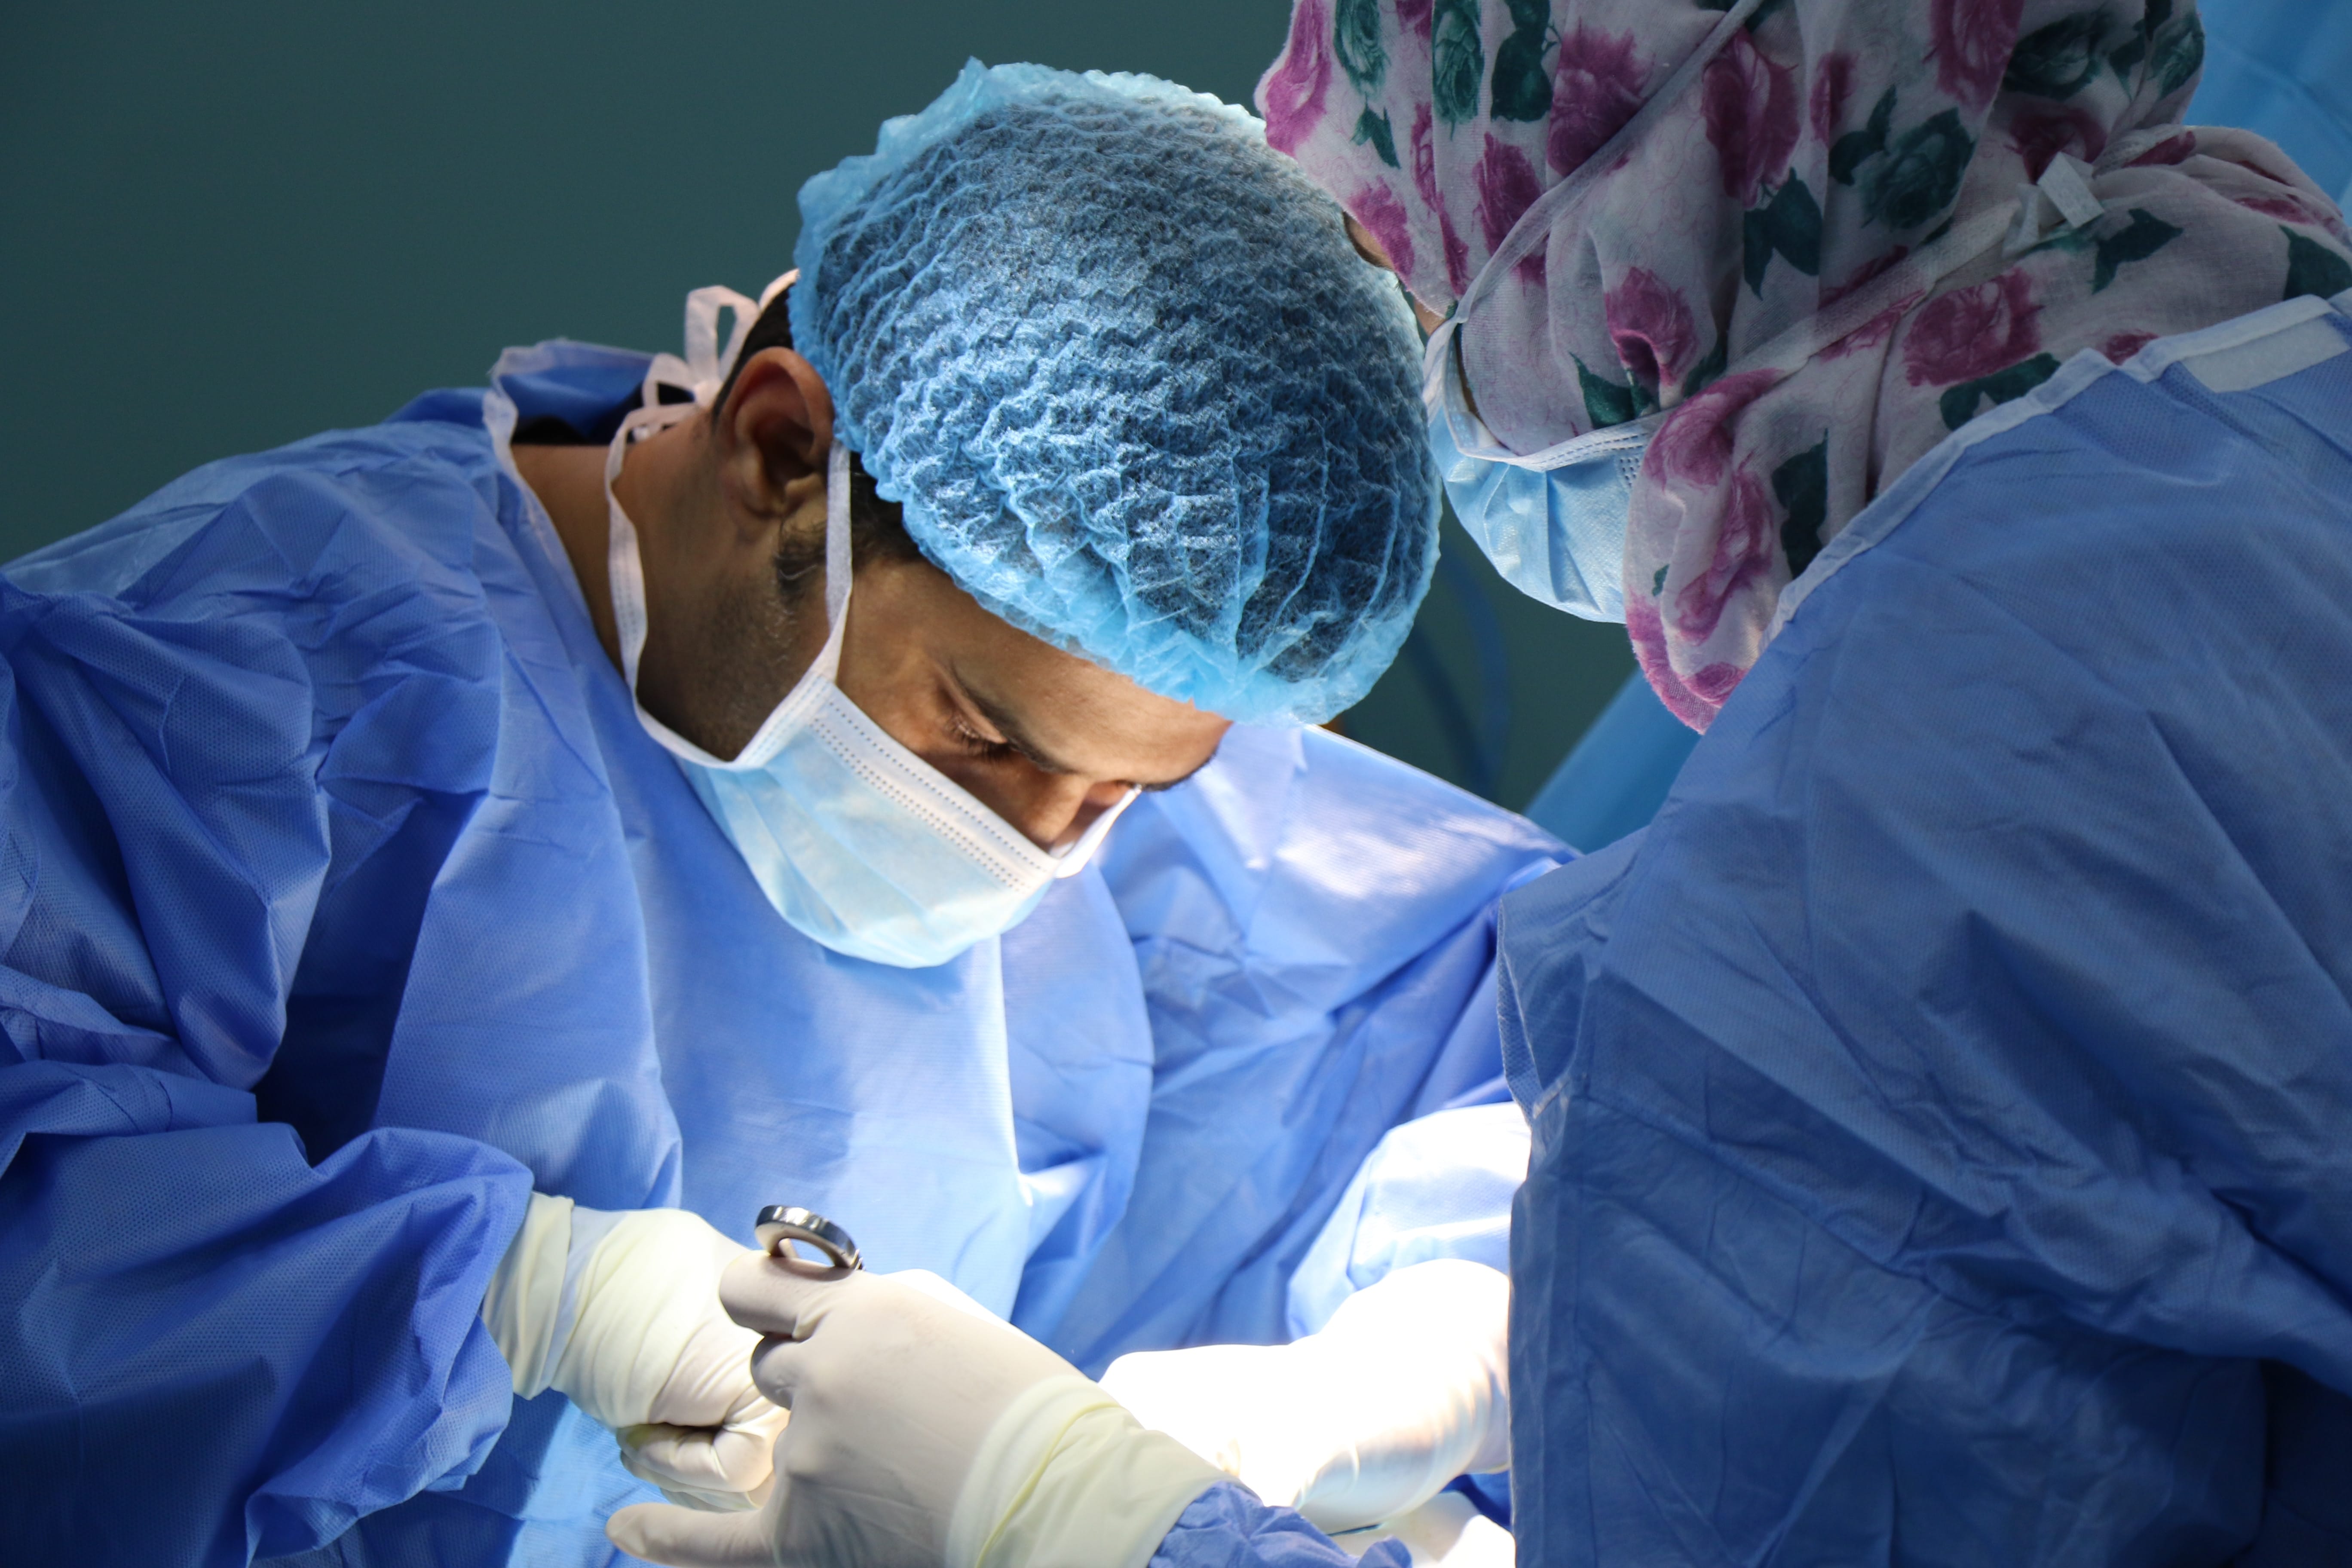 Doctor performing surgery; image by Jafar Ahmed, via Unsplash.com.